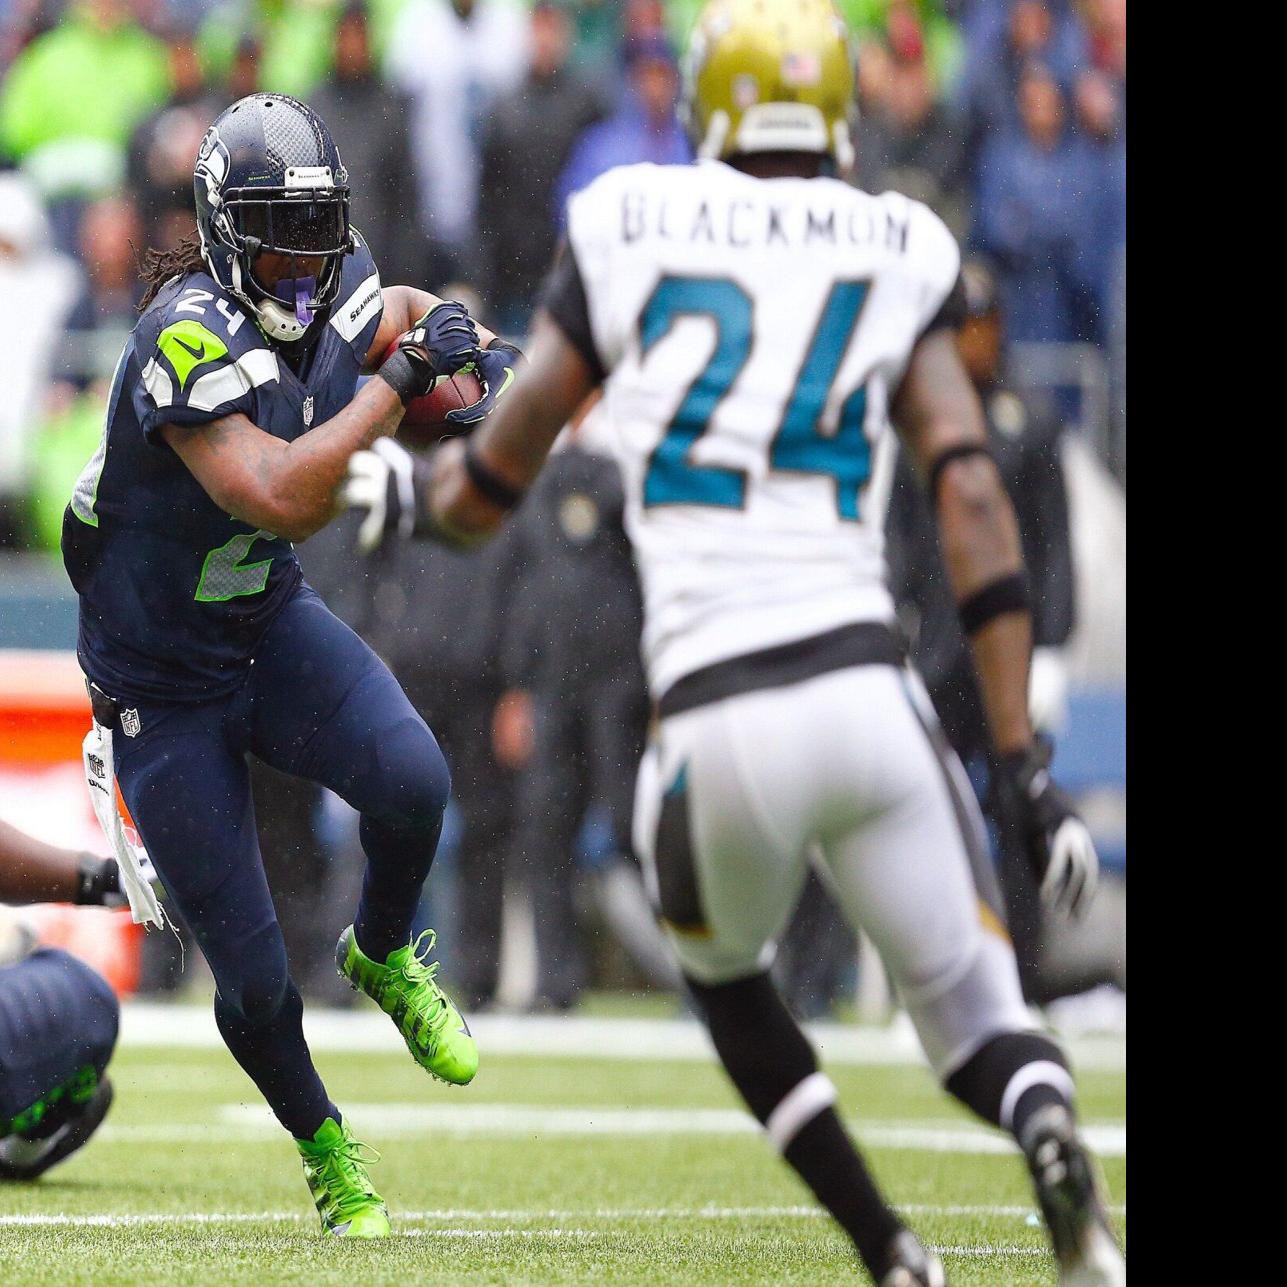 Looking back at the Seahawks' 2013 Super Bowl season: Week 3 vs. Jaguars, Seahawks